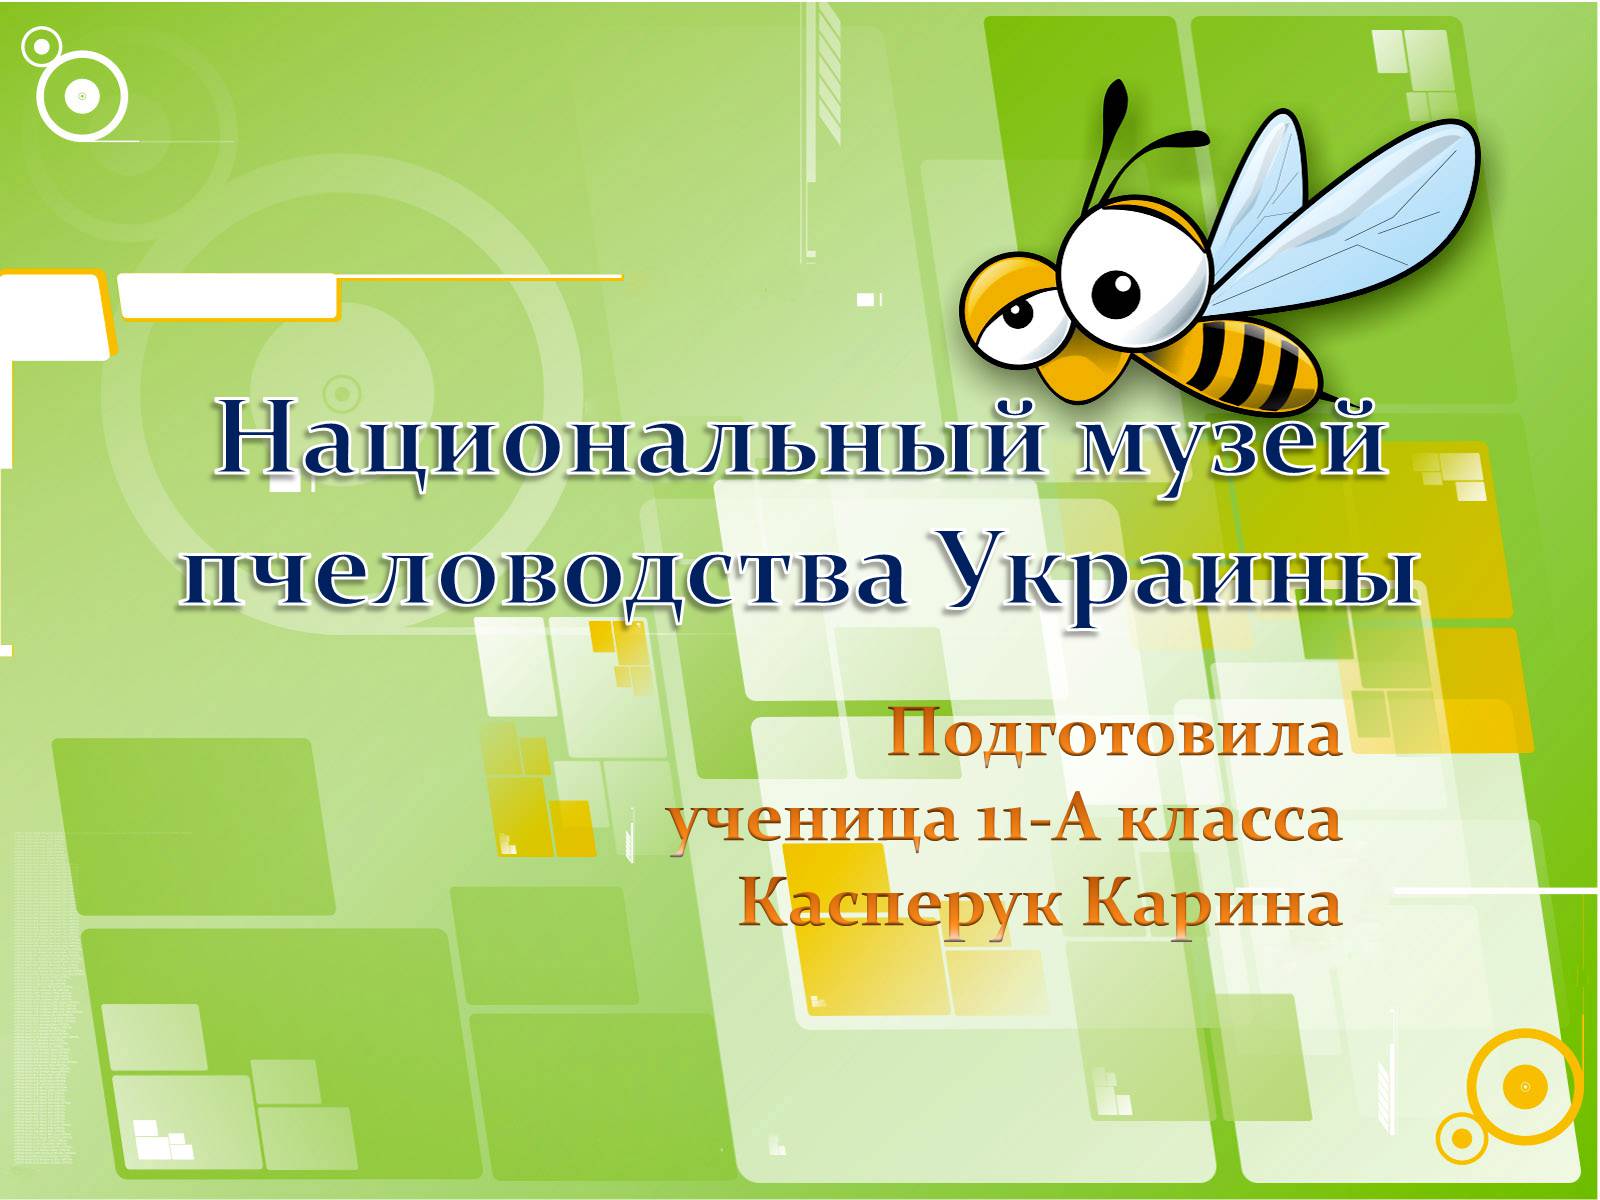 Презентація на тему «Национальный музей пчеловодства Украины» - Слайд #1